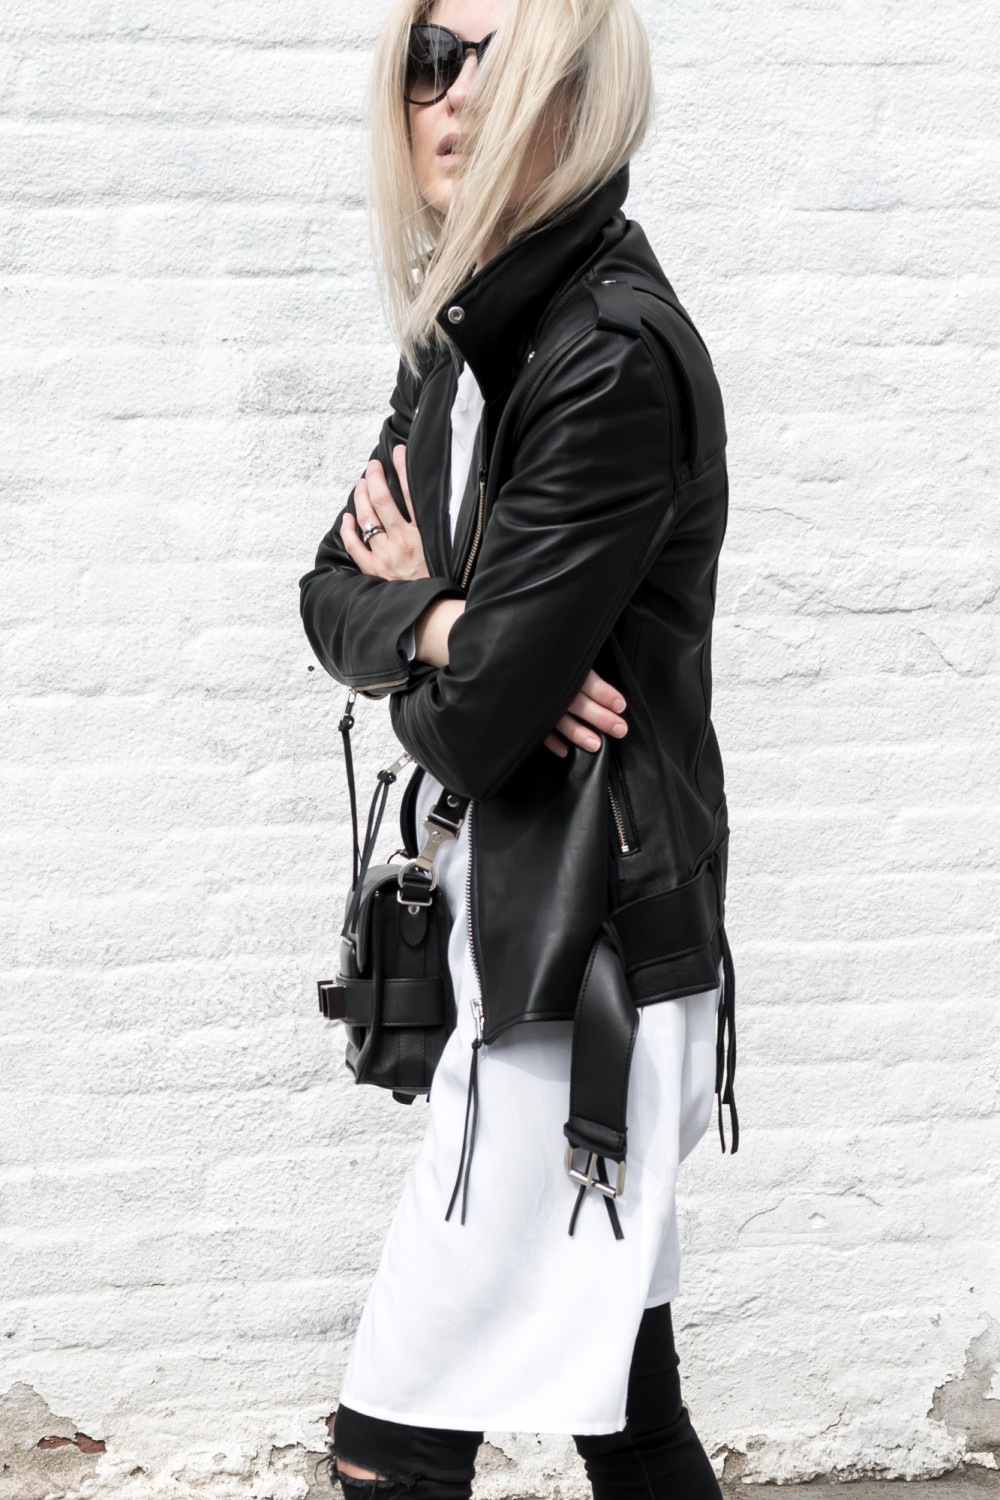 figtny.com | Hironae Paris Leather Jacket